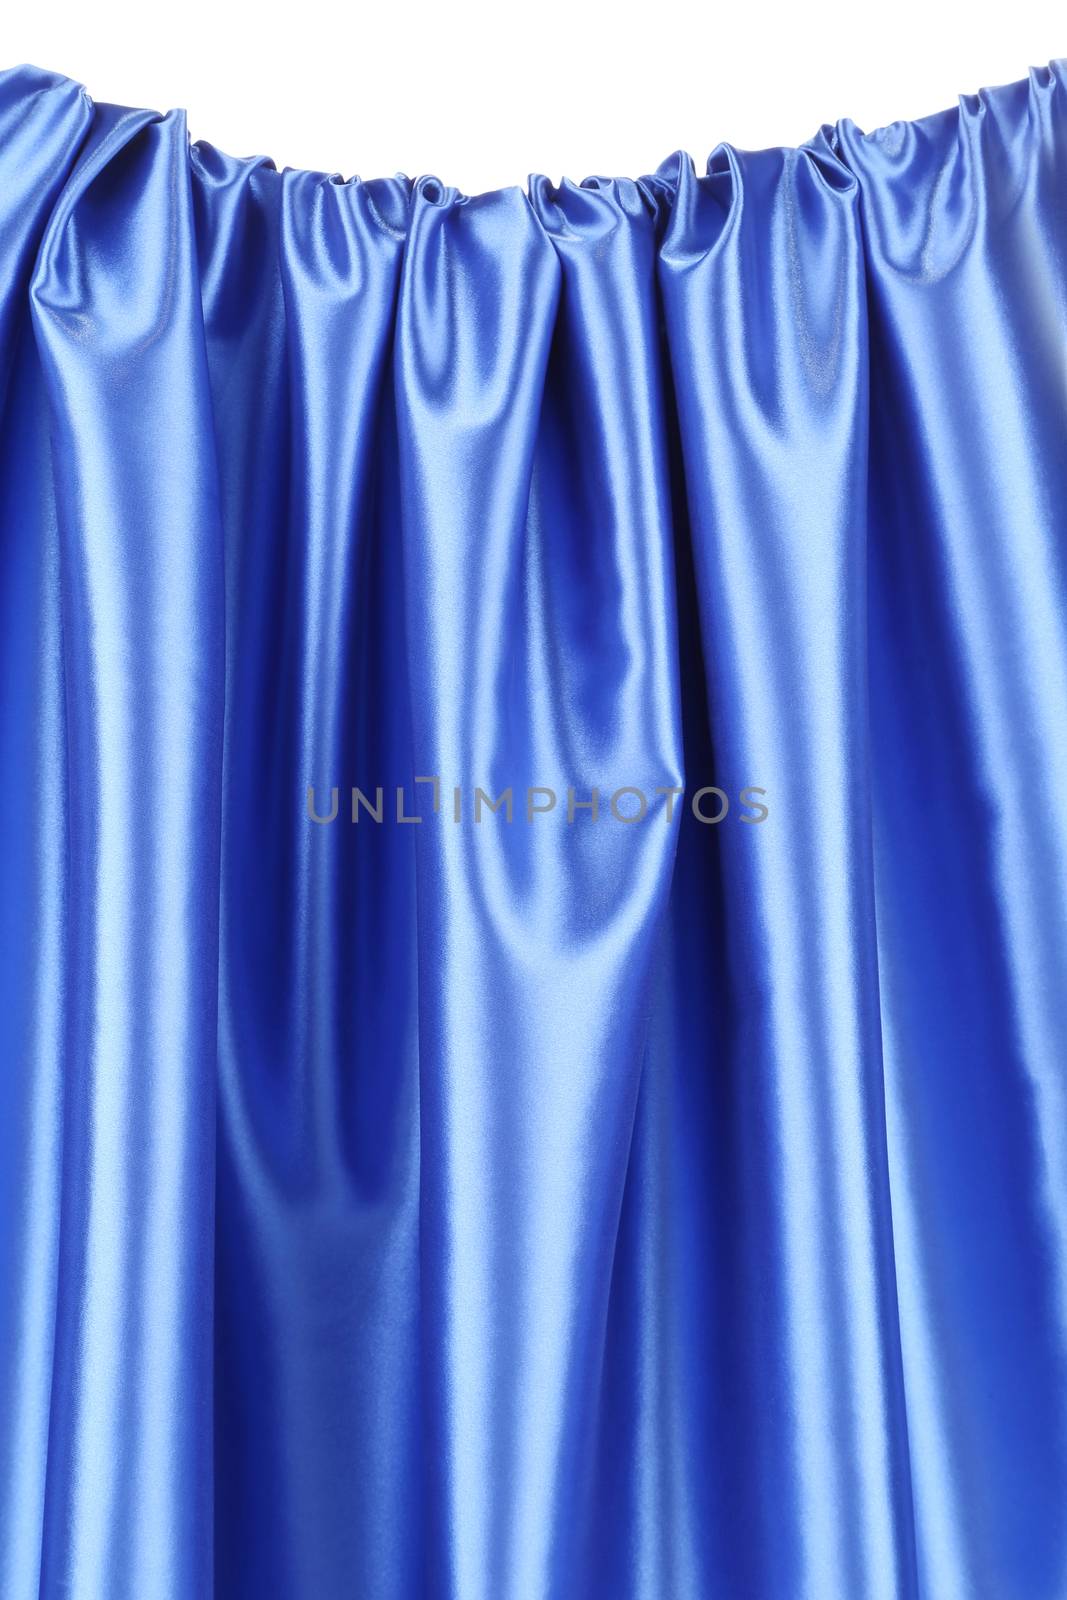 Blue silk drapery. by indigolotos